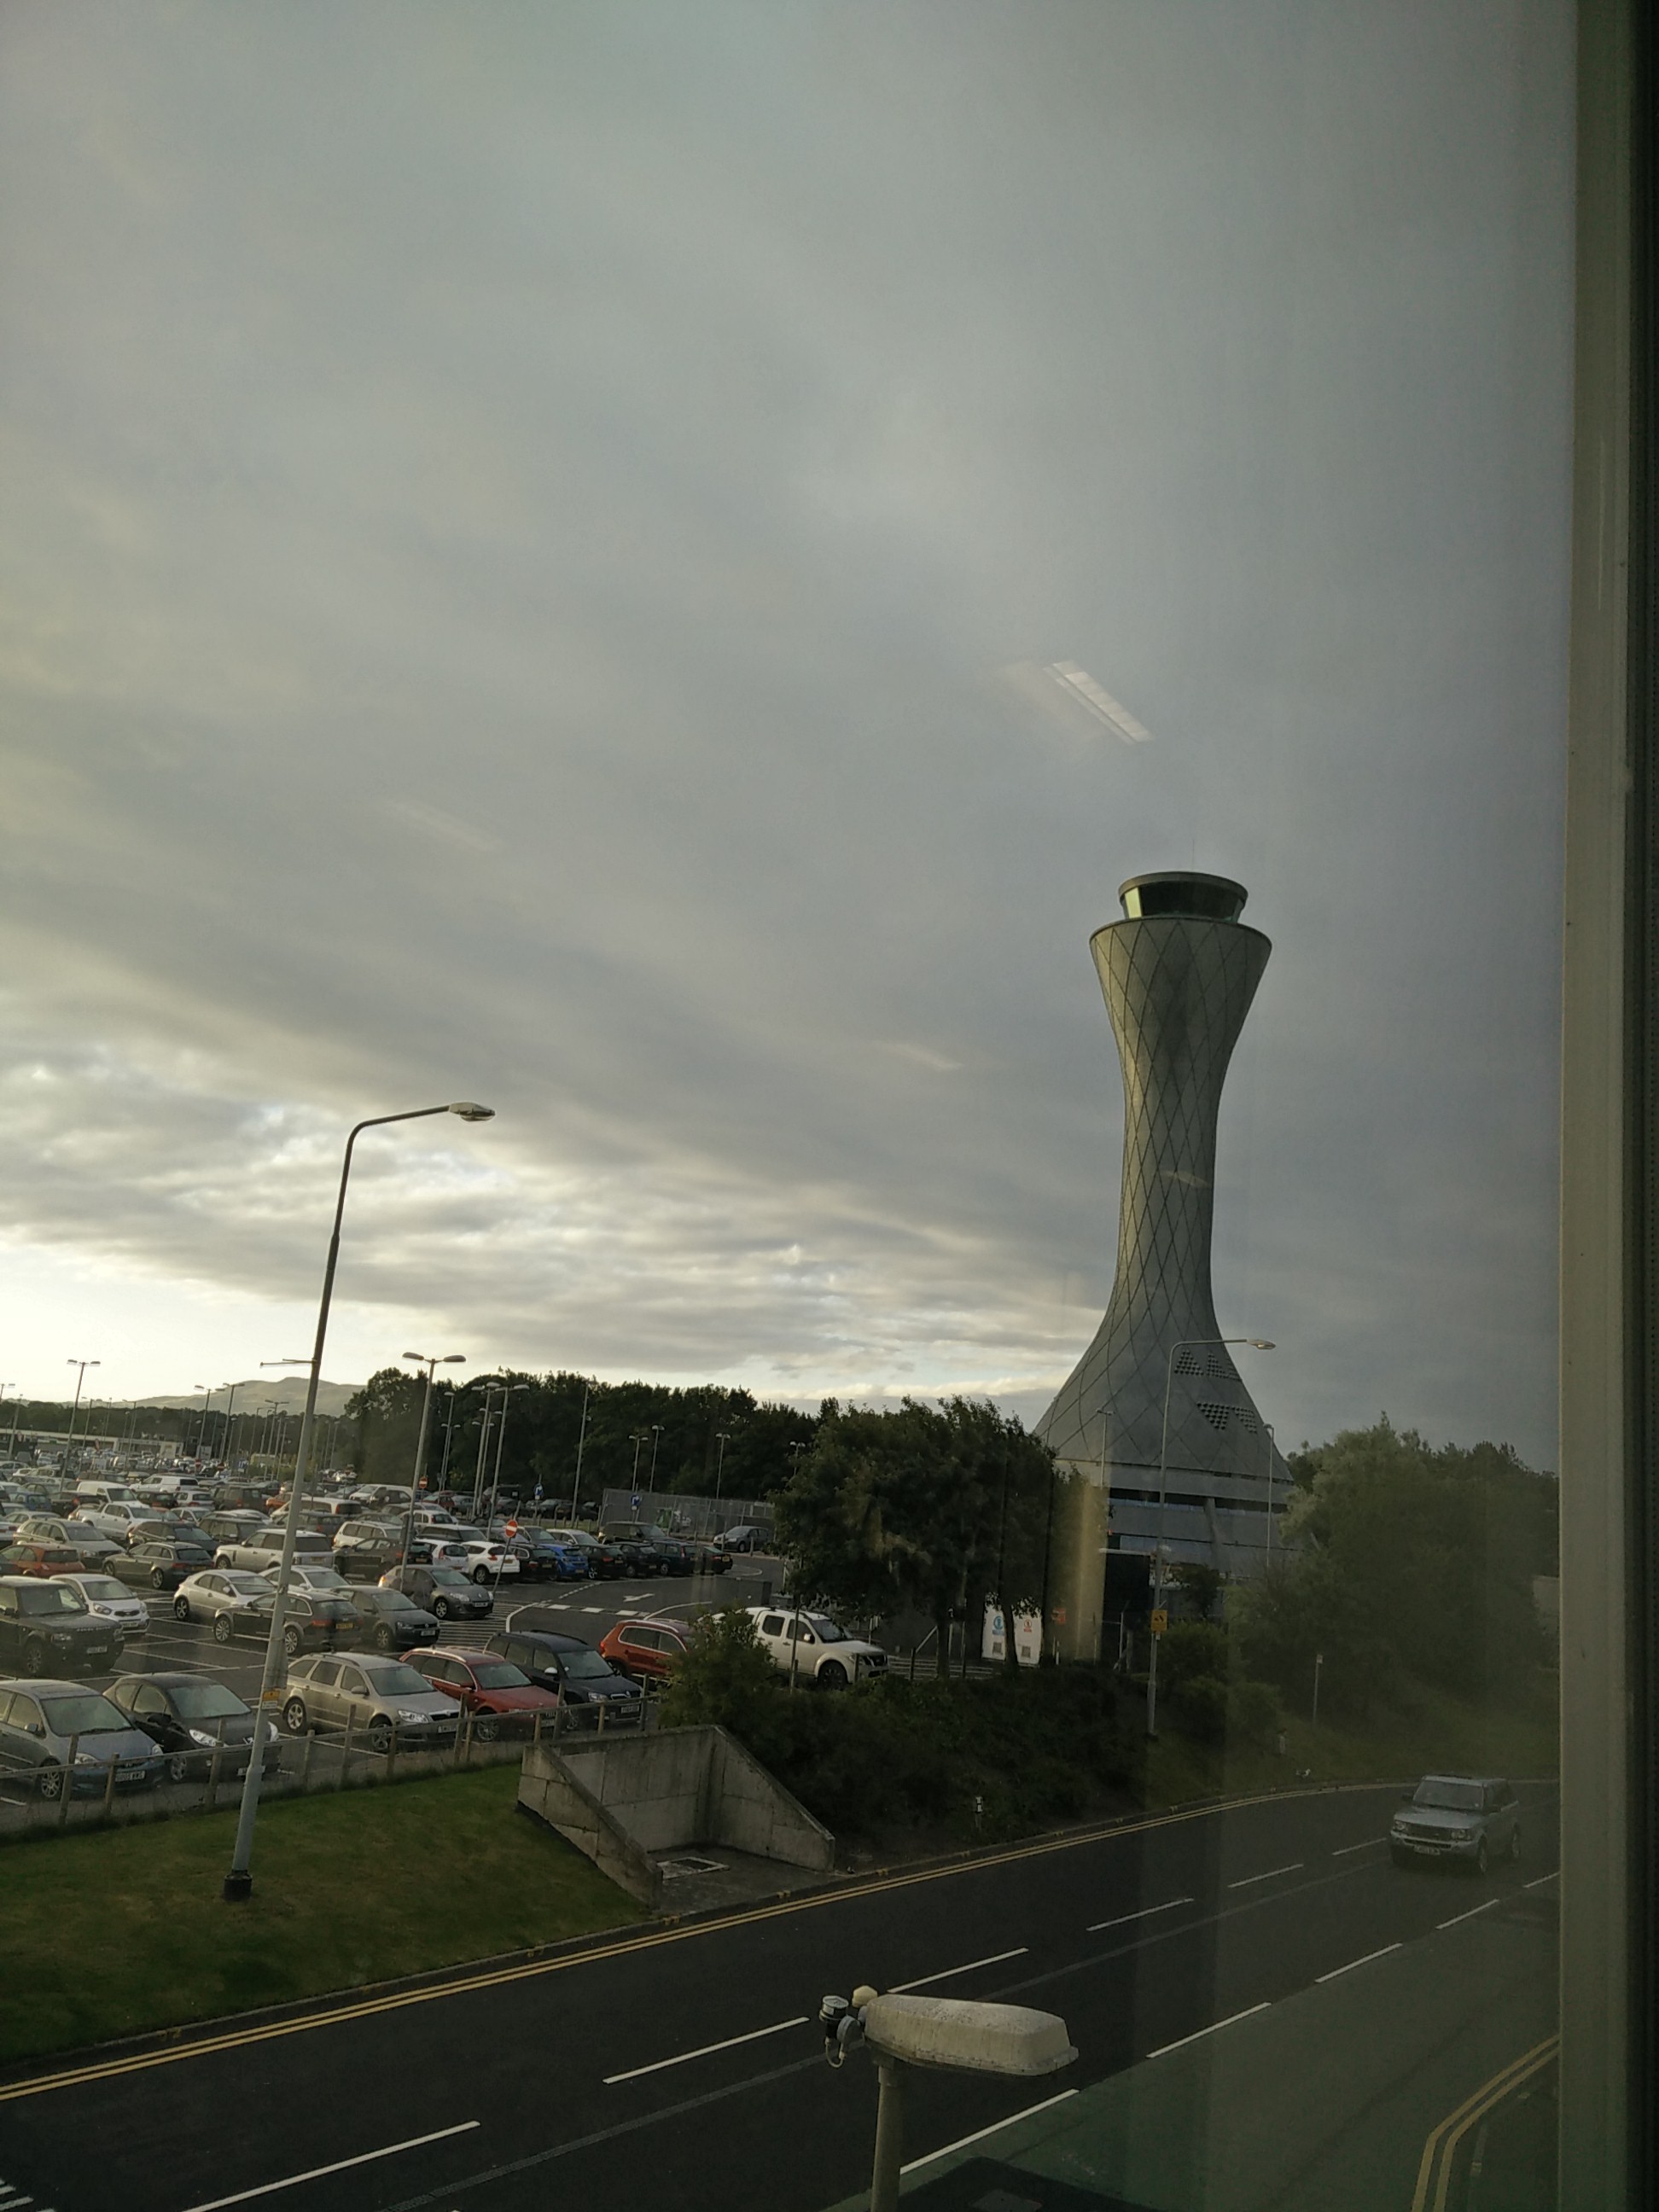 edinburgh airport tower